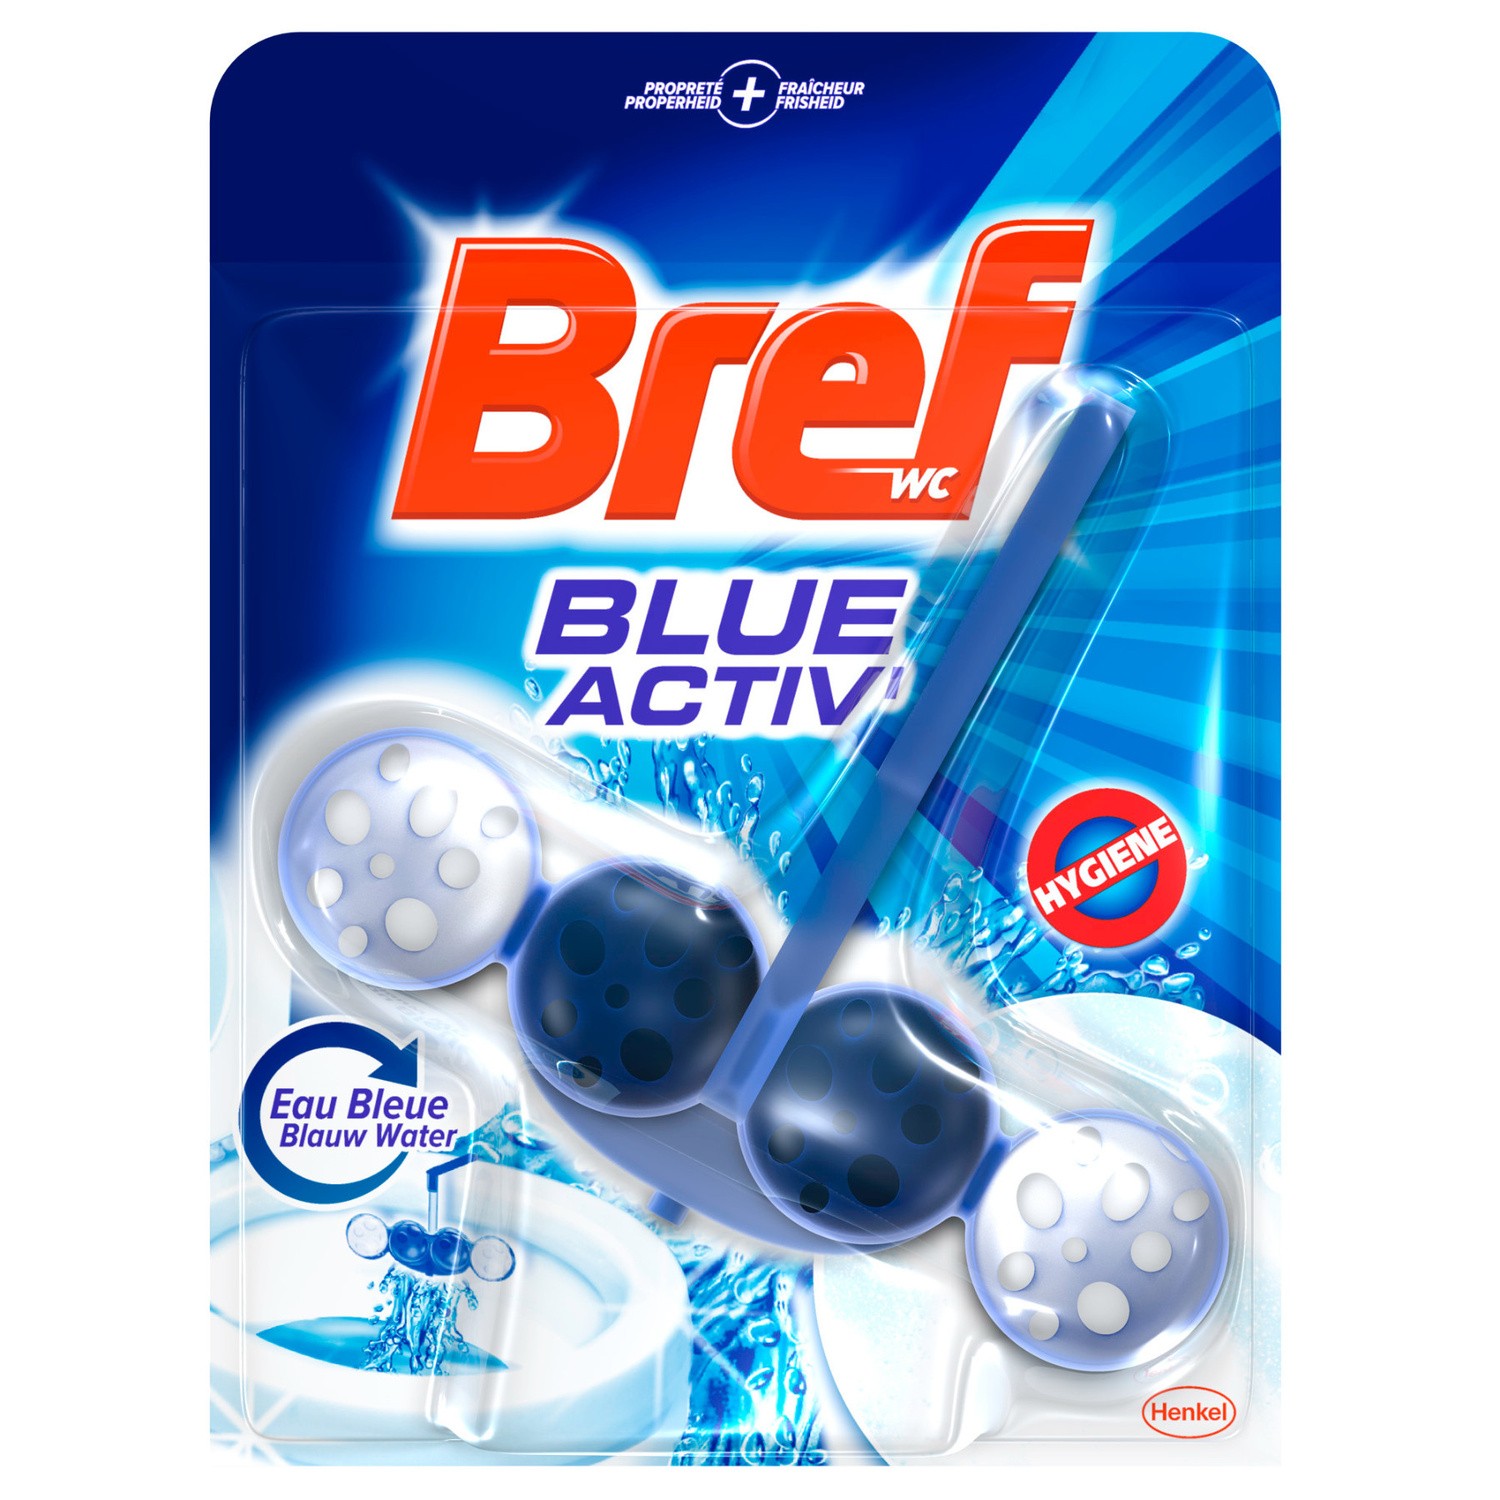 Bloc WC Blue Activ'